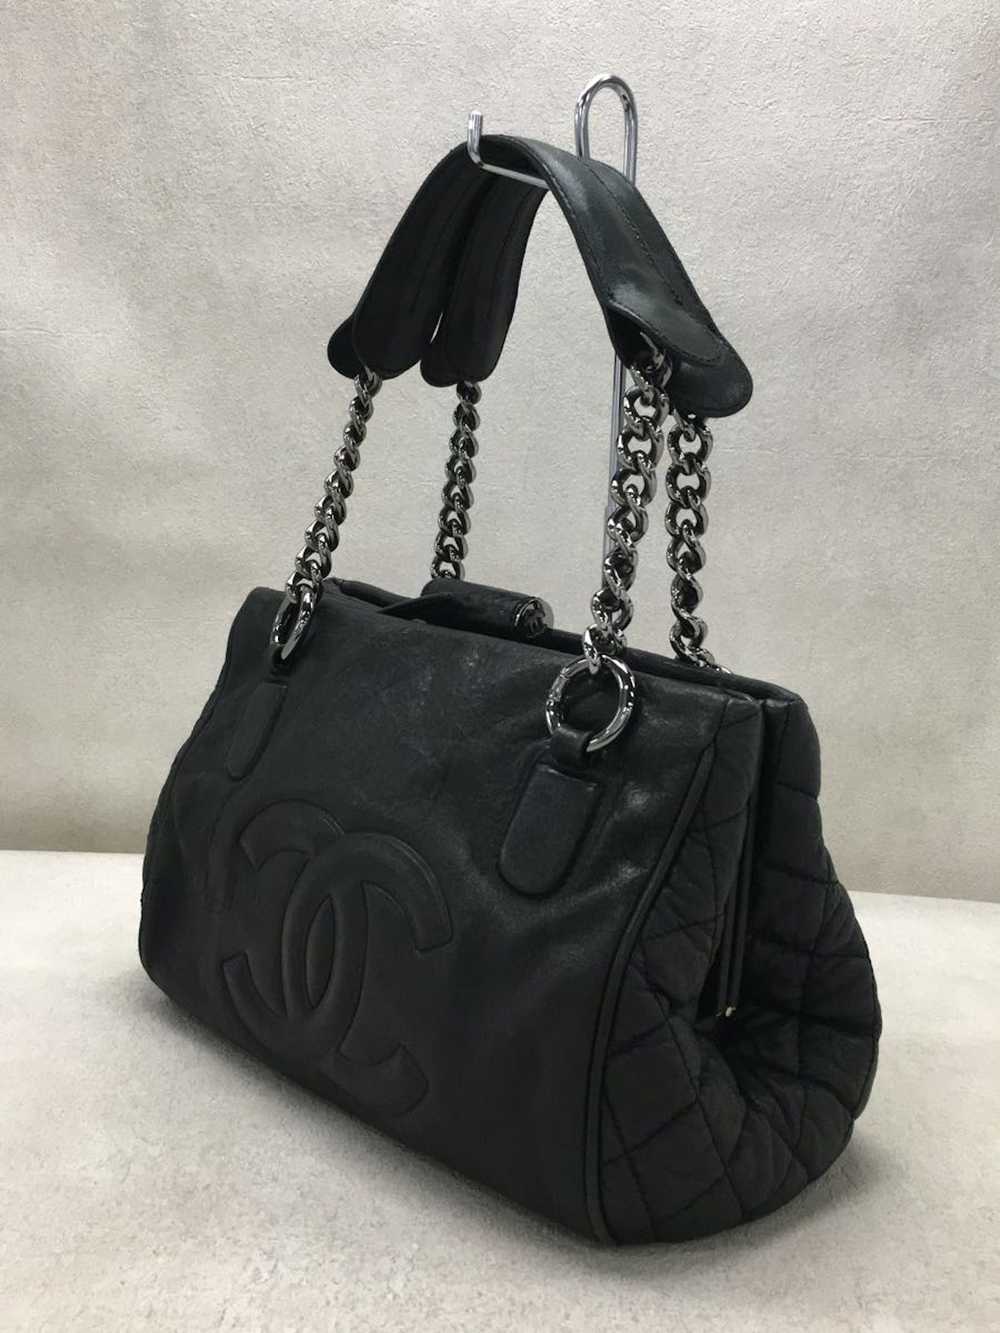 Chanel Chanel Lamb Leather Chain Shoulder Bag Bla… - image 2